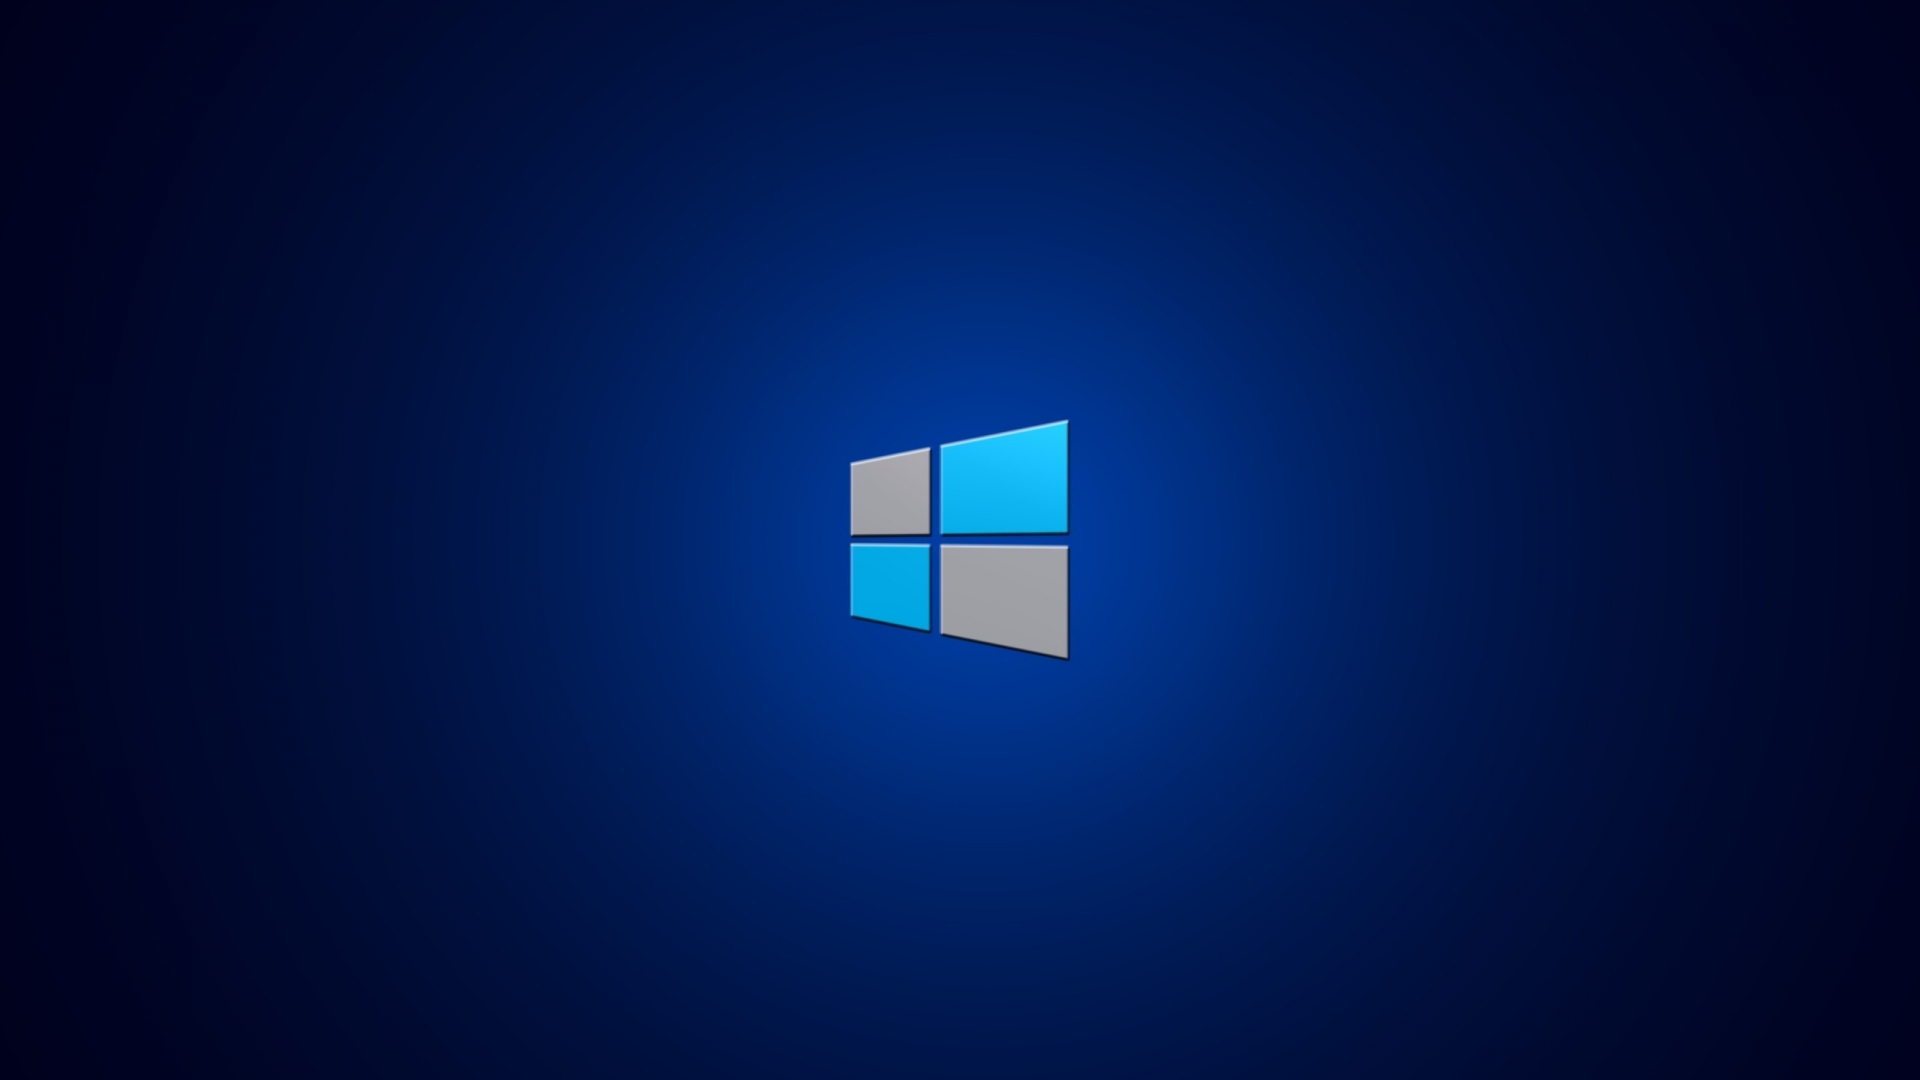 Windows 8 Background for 1920 x 1080 HDTV 1080p resolution